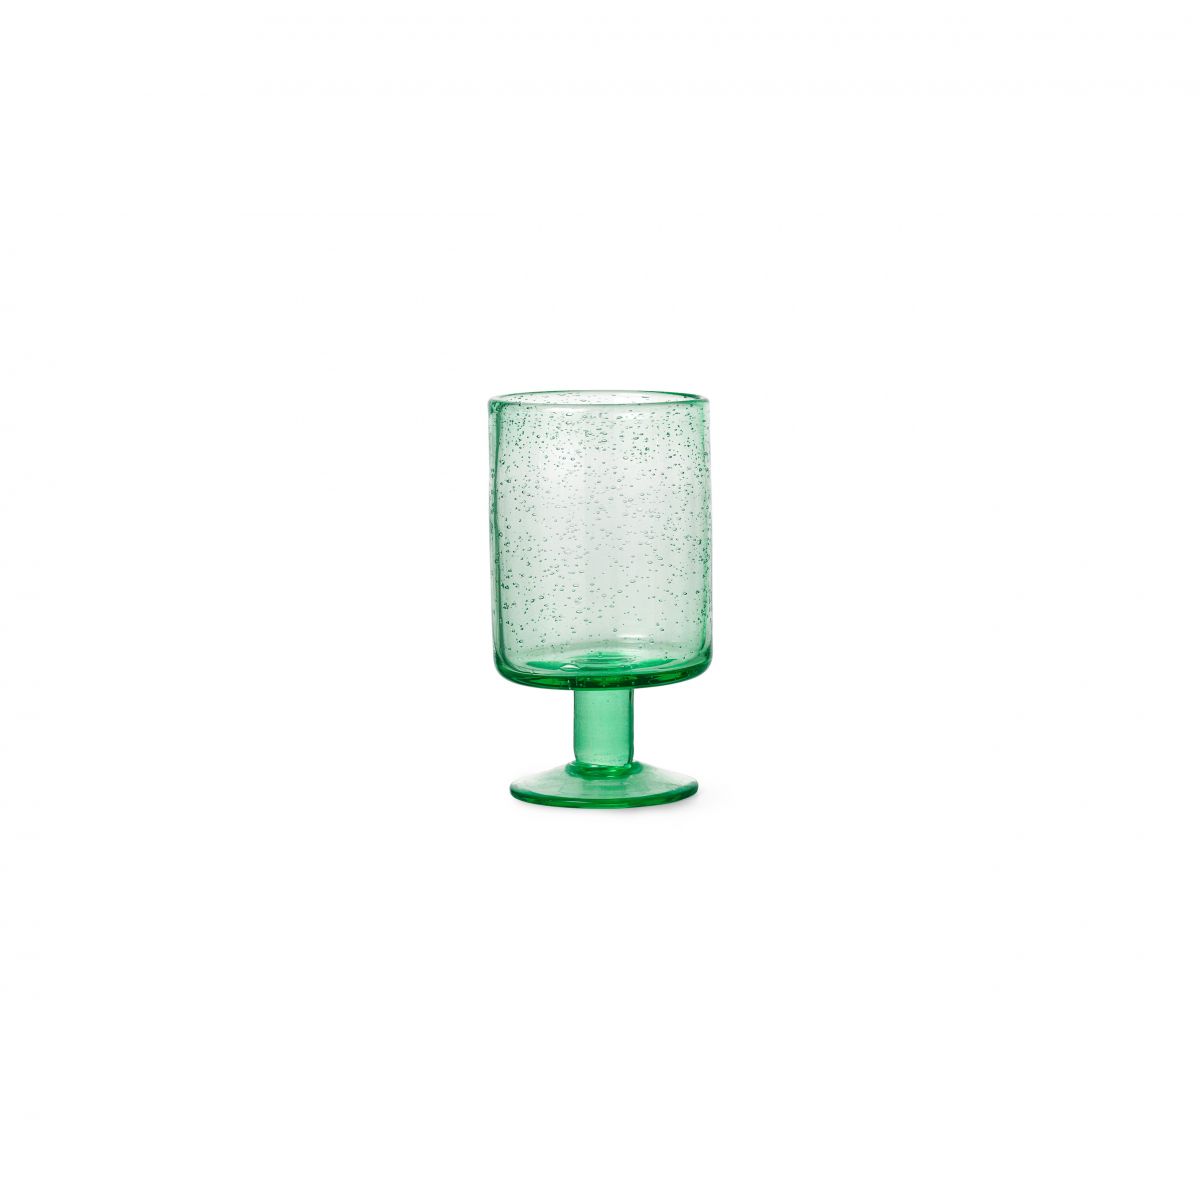 Oli Wine Glass - Recycled clear